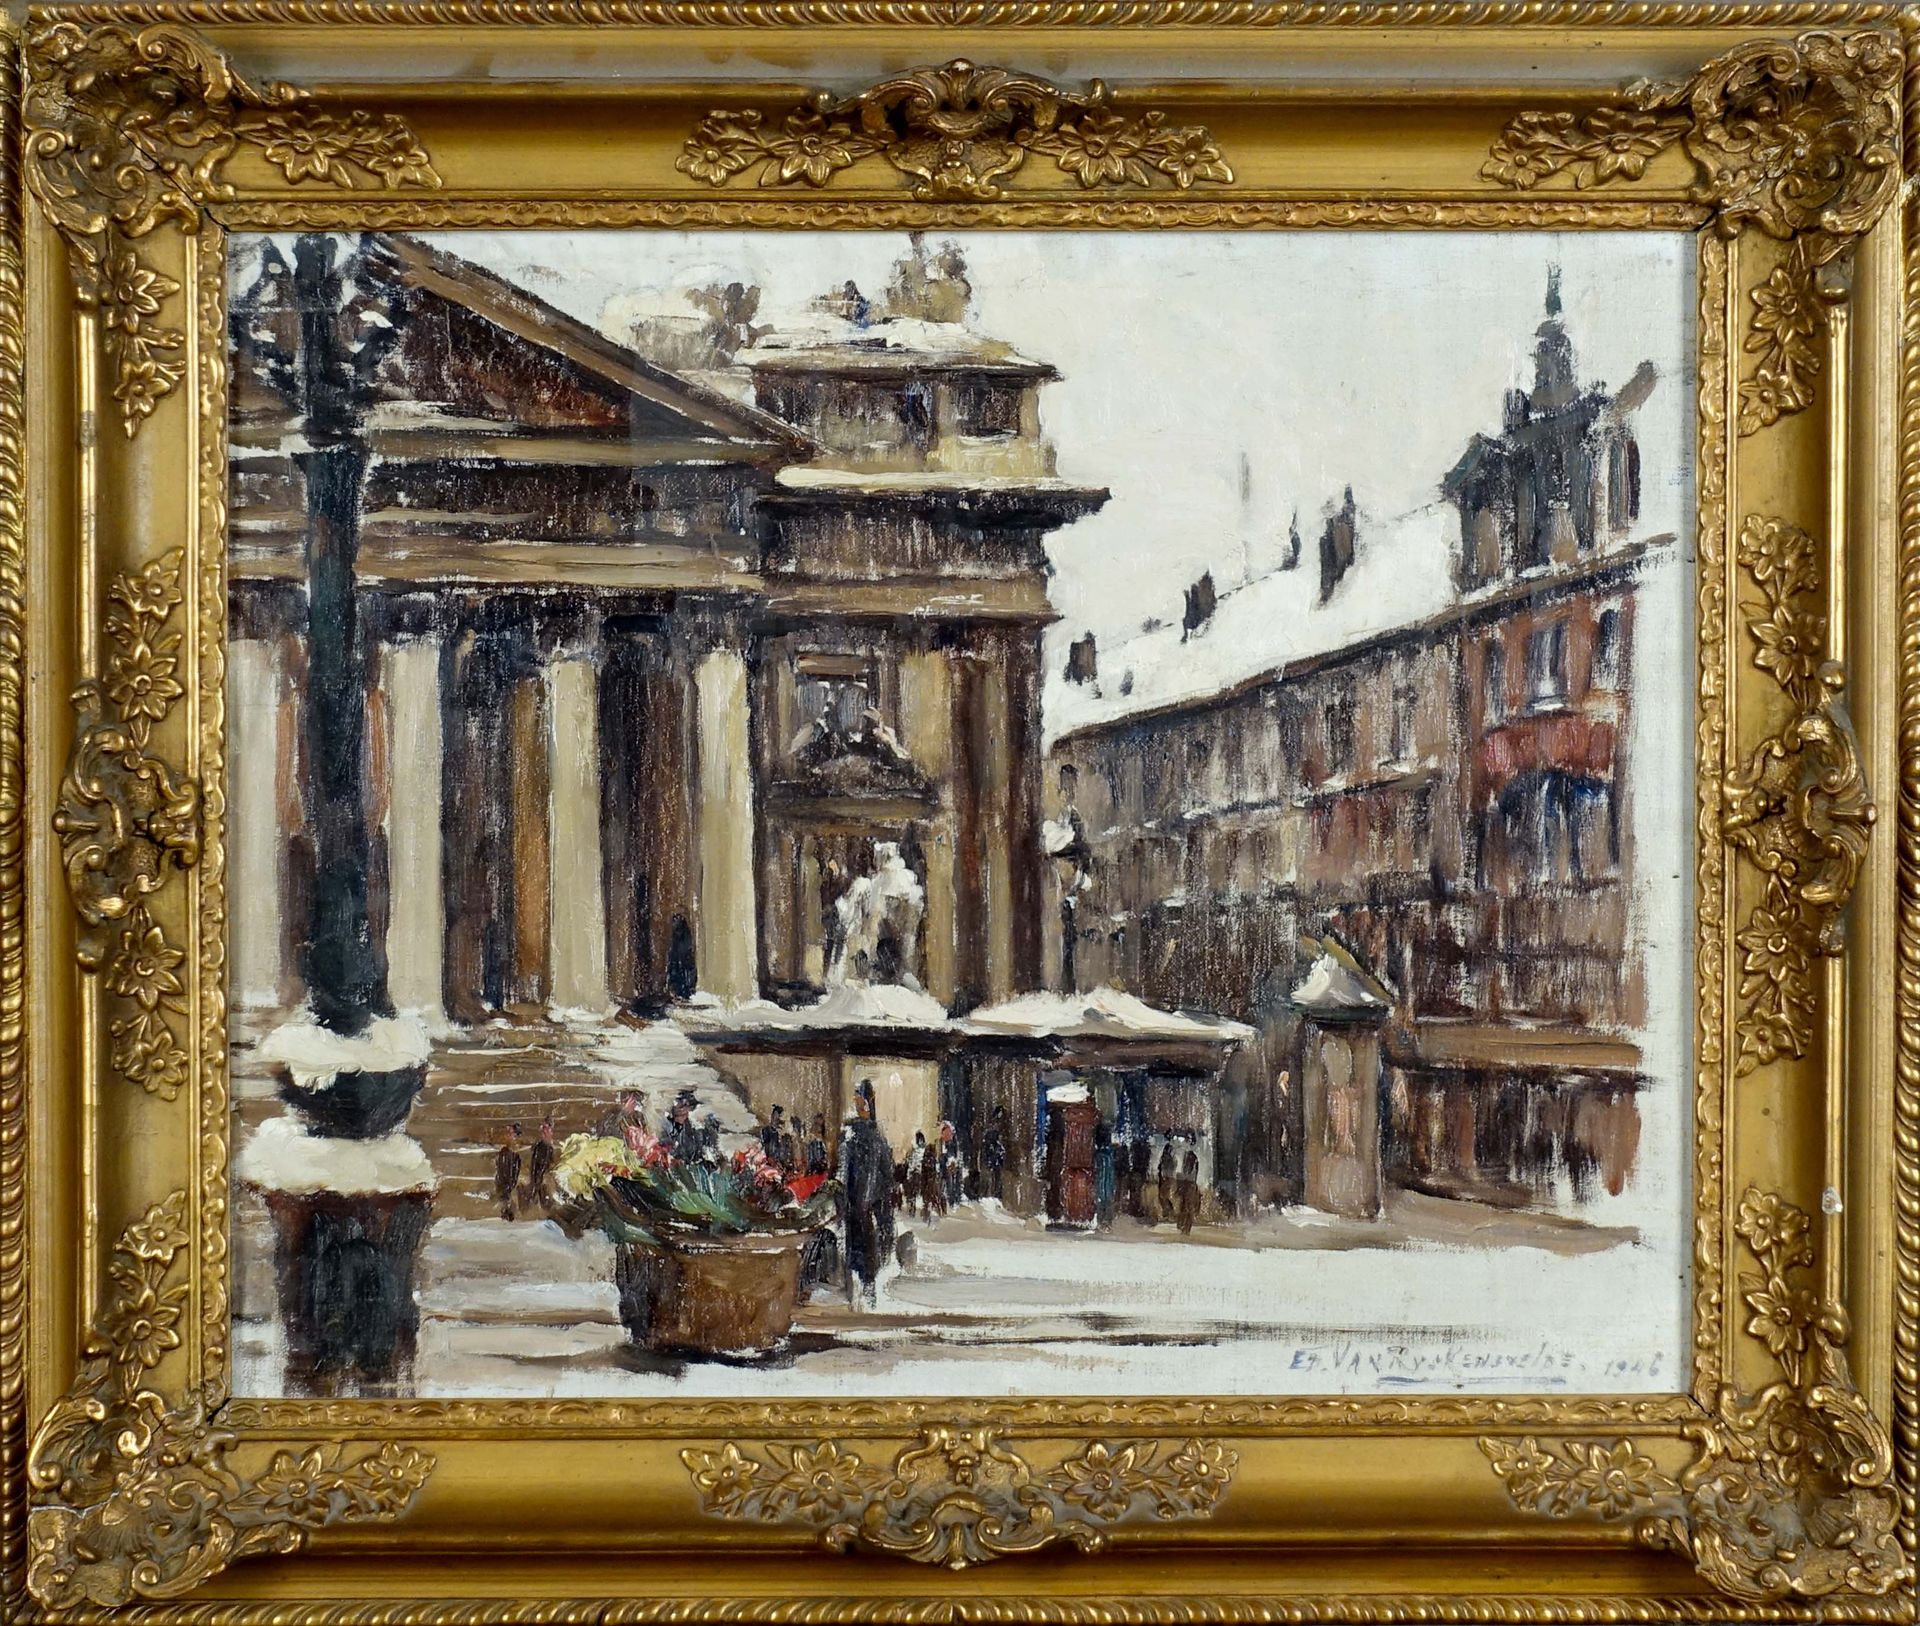 Ed. Van Ryskensvelde. 布鲁塞尔证券交易所（日期为1946年）。布面油画，右下方有签名。尺寸：40 x 50厘米。